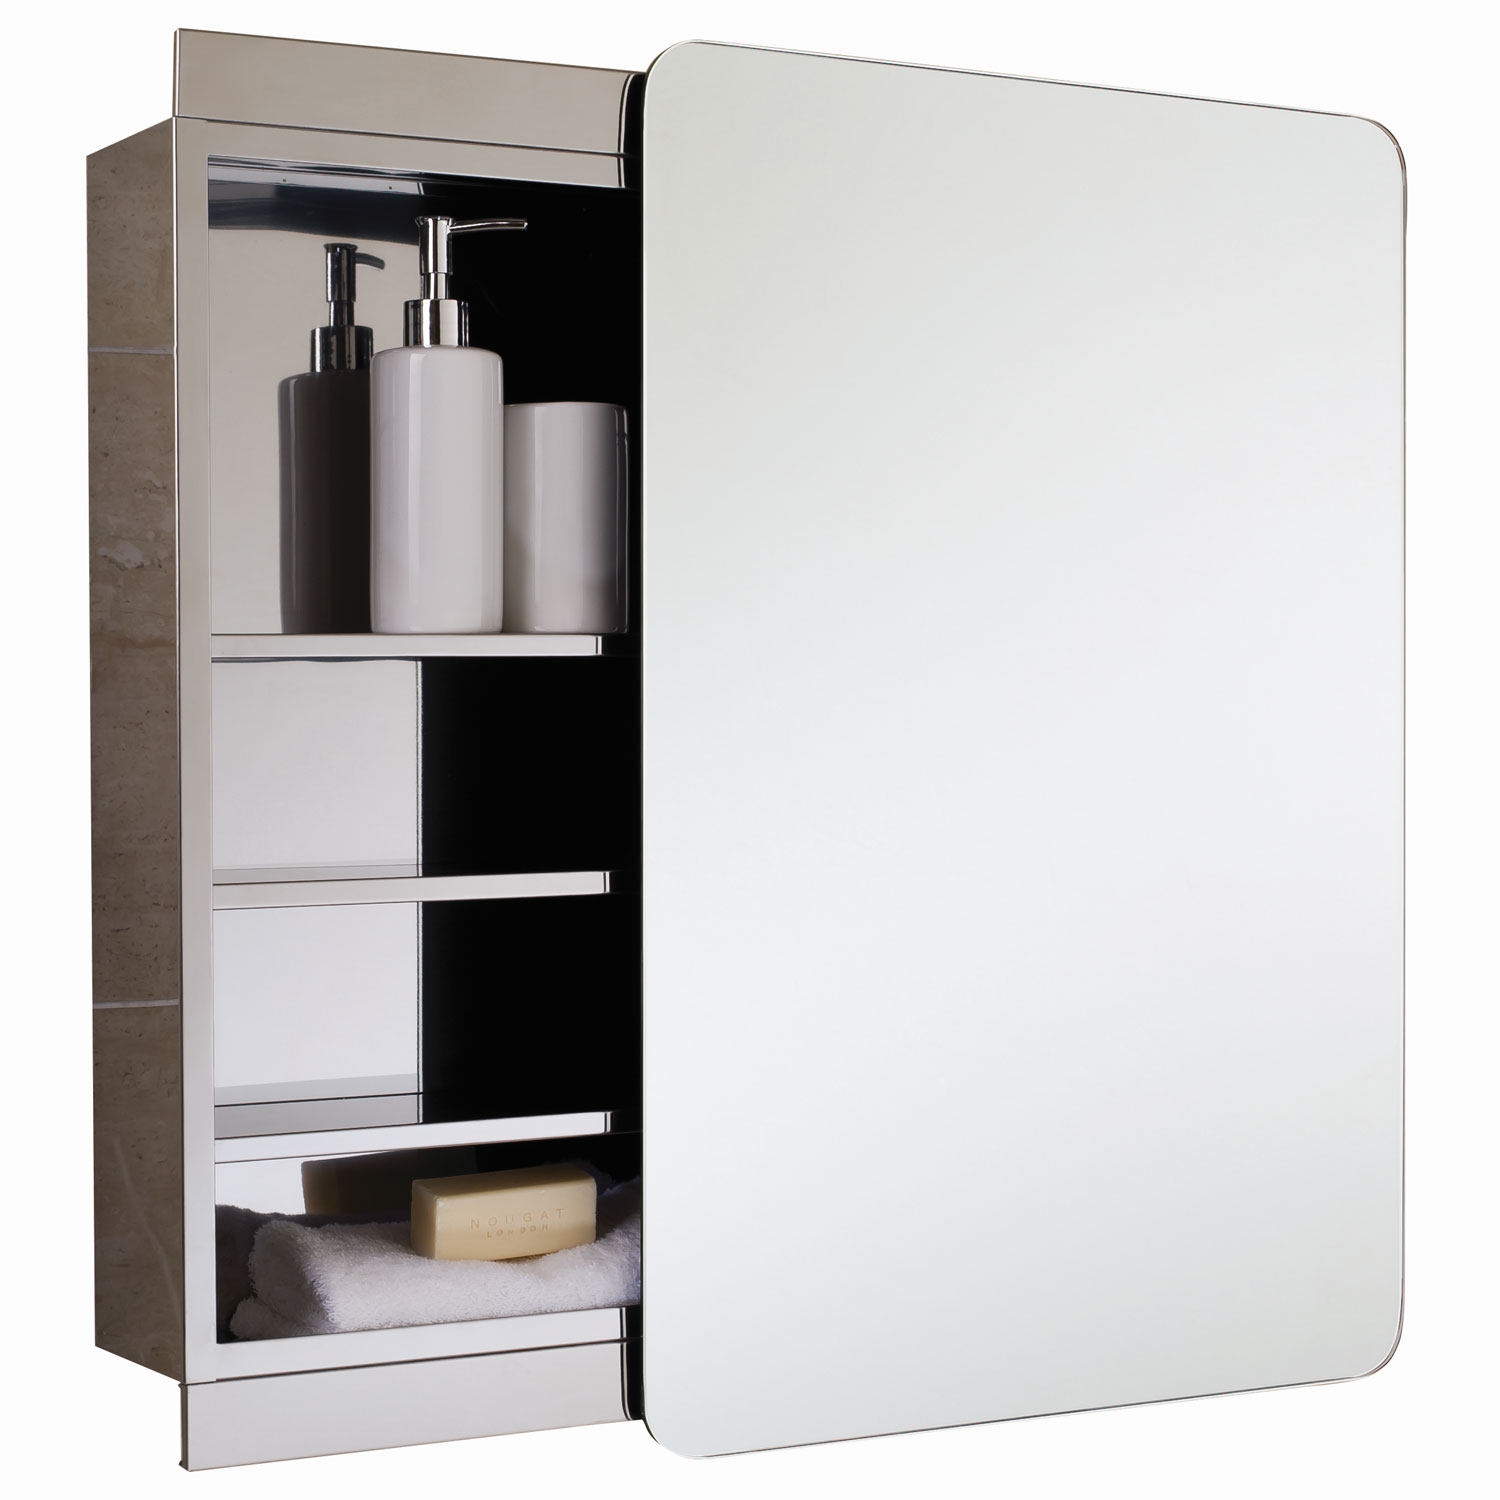 Rak Slide Single Cabinet With Sliding Mirrored Door 660mm H X 460mm W 5056176003913 Ebay